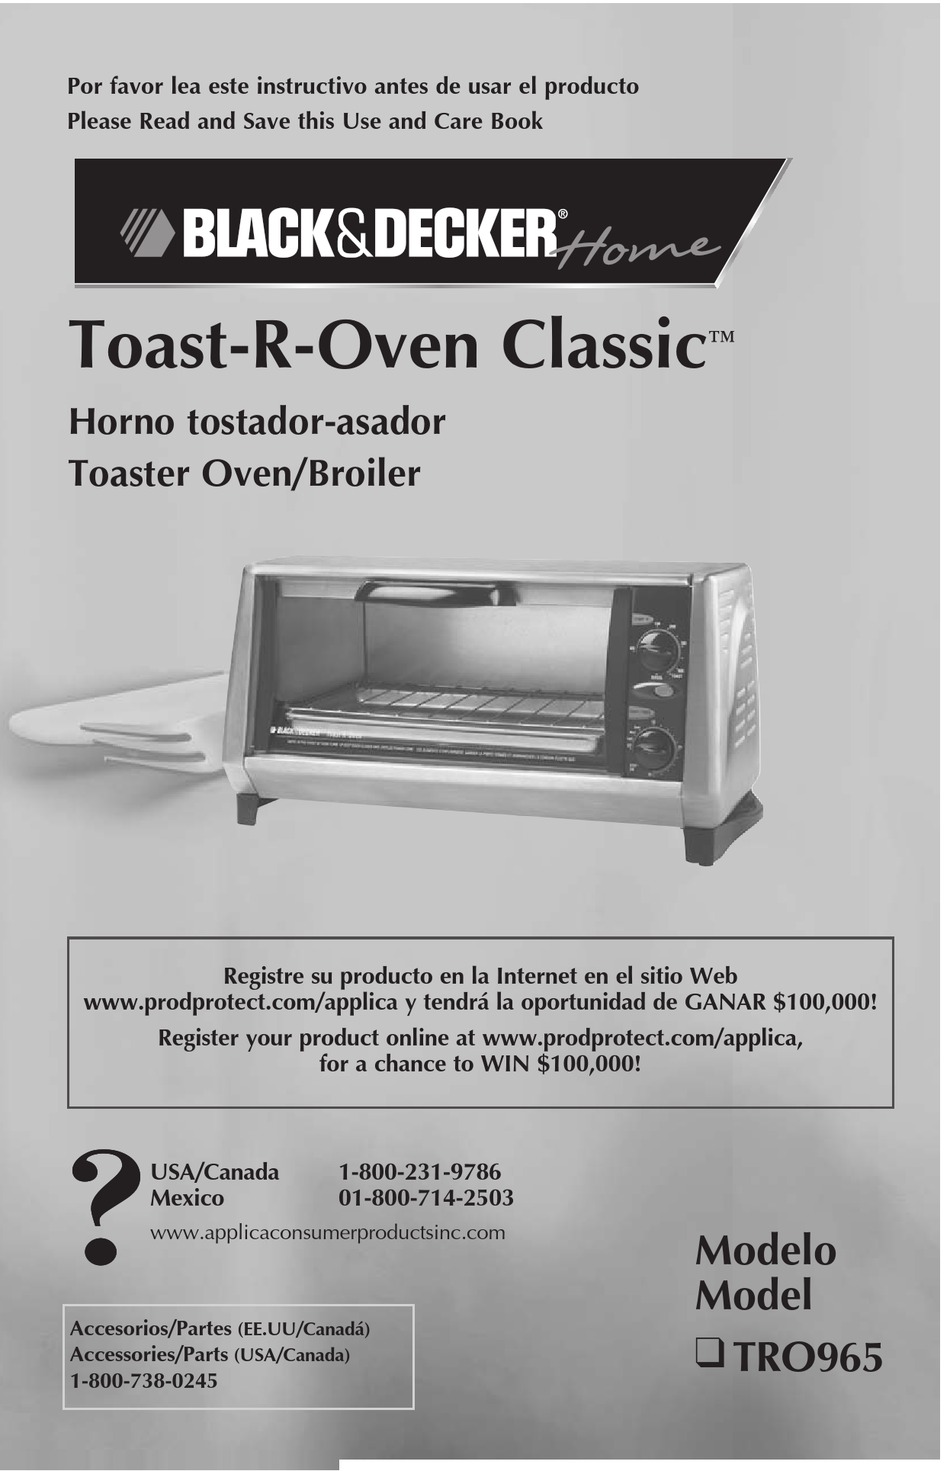 https://data2.manualslib.com/first-image/i1/2/173/17241/black-decker-toast-r-oven-classic-tro965.jpg